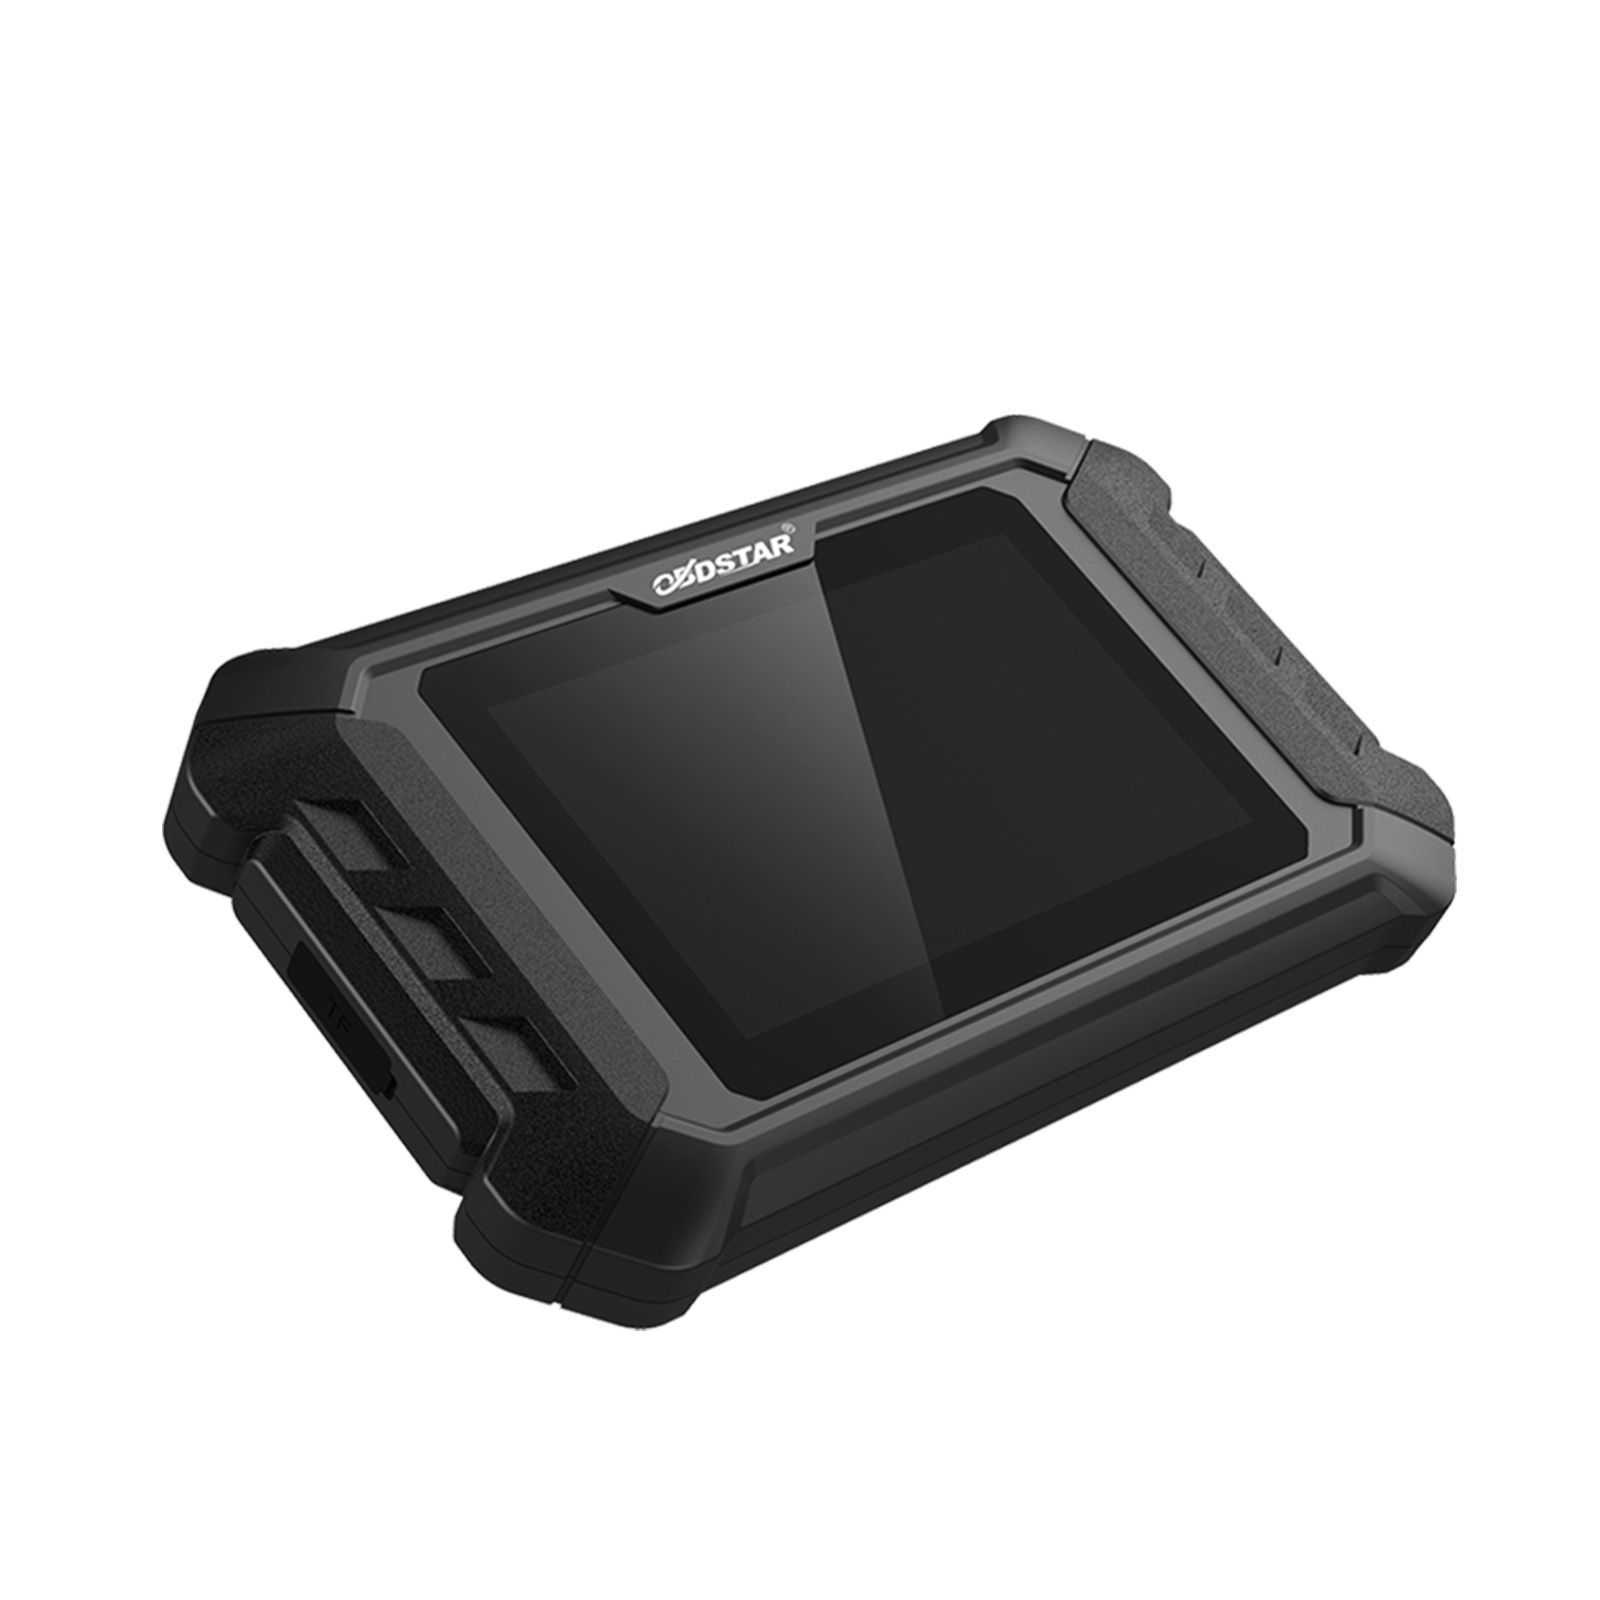 OBDSTAR iScan MV Agusta Intelligentes Motorrad Diagnosewerkzeug Tragbarer Tablet Scanner